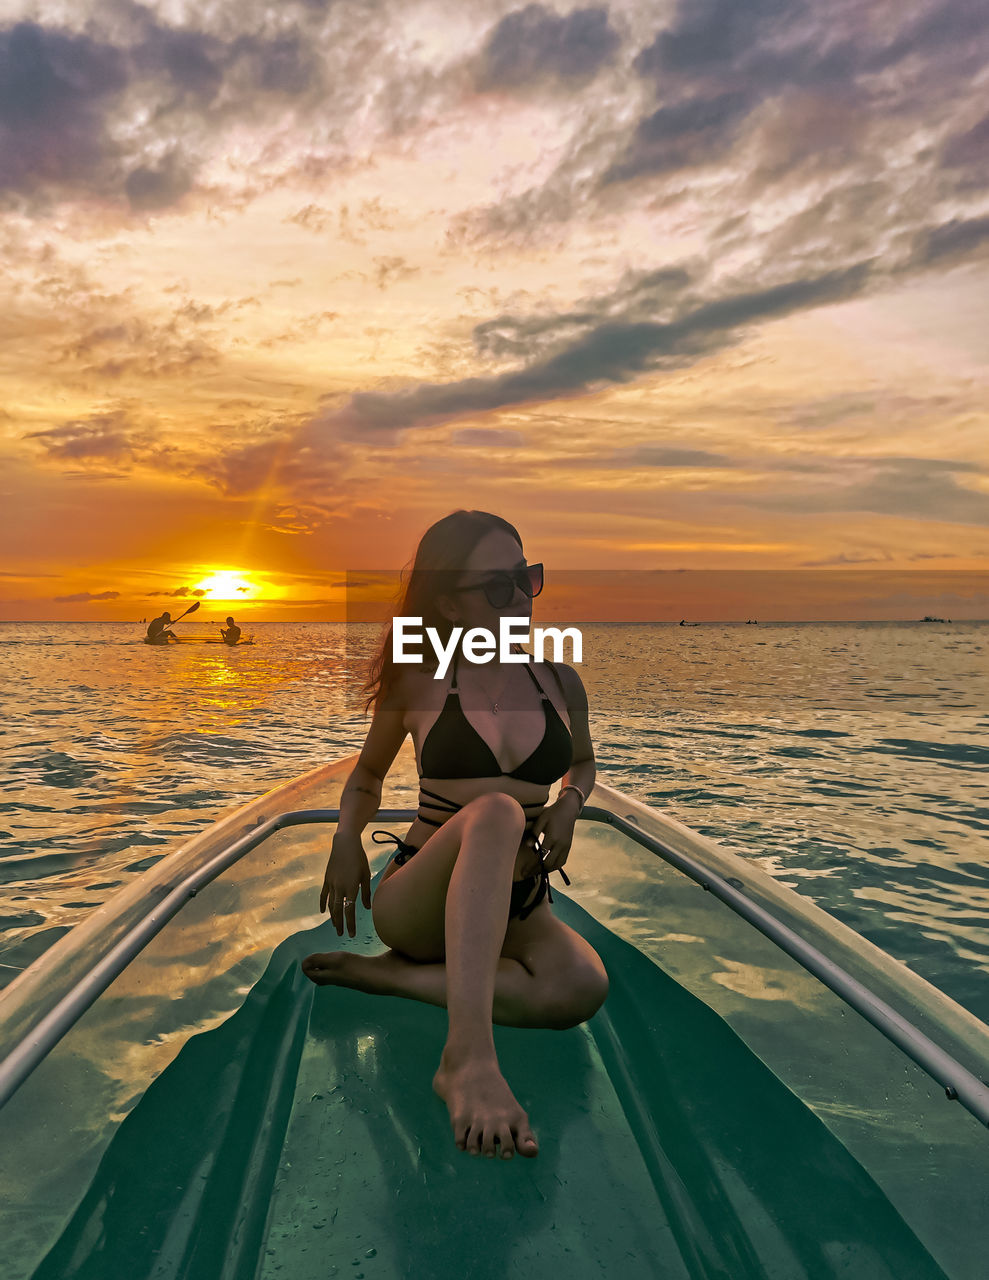 Sunset crystal kayak new water activities in boracay philippines